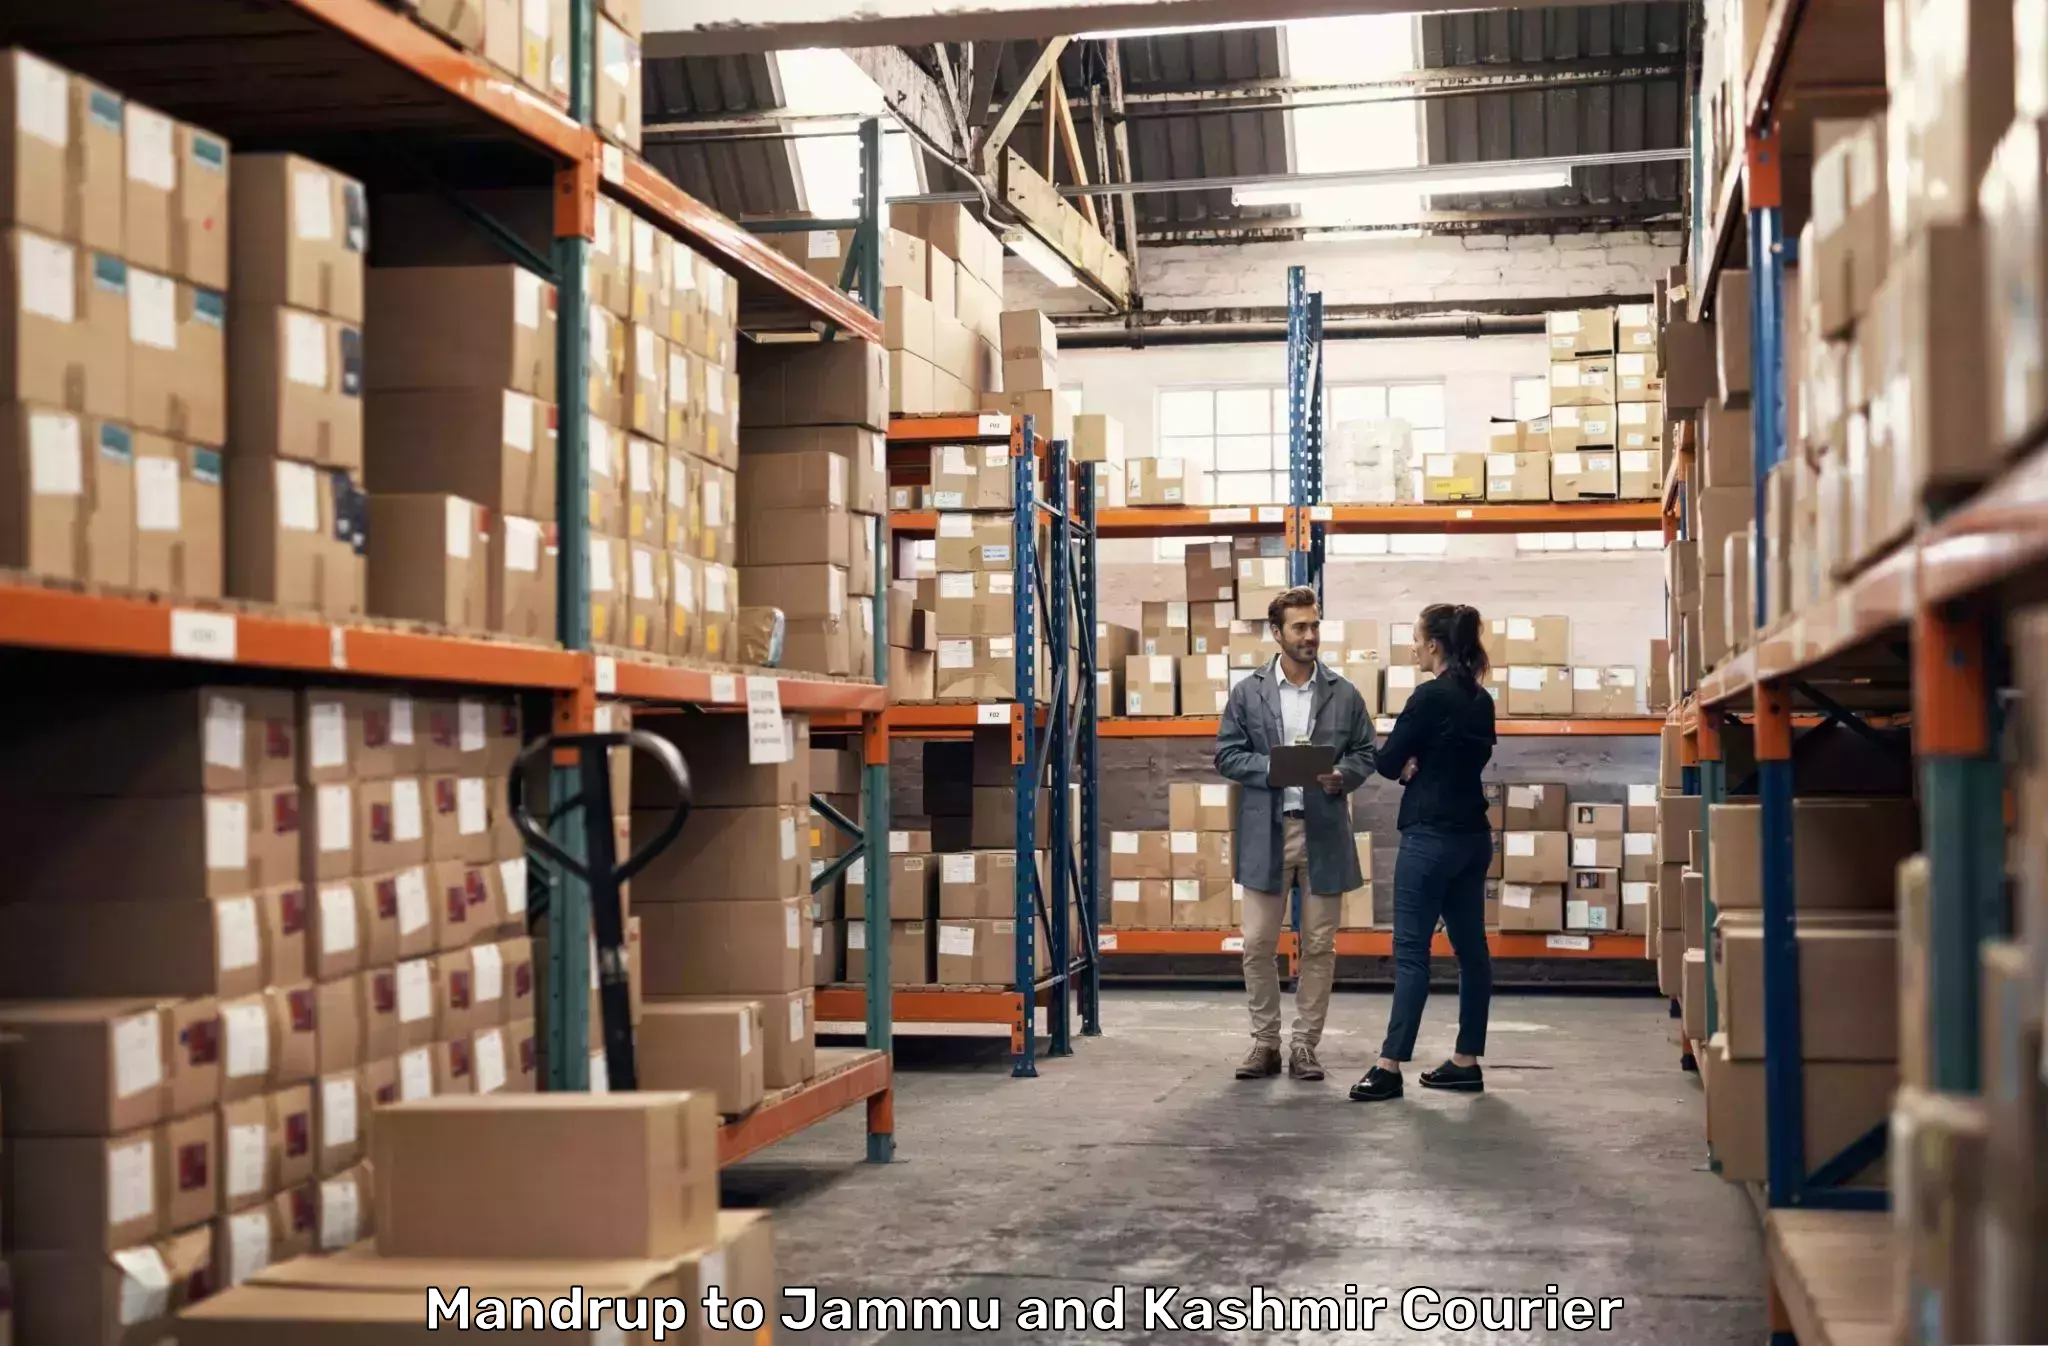 Express logistics providers Mandrup to Jammu and Kashmir